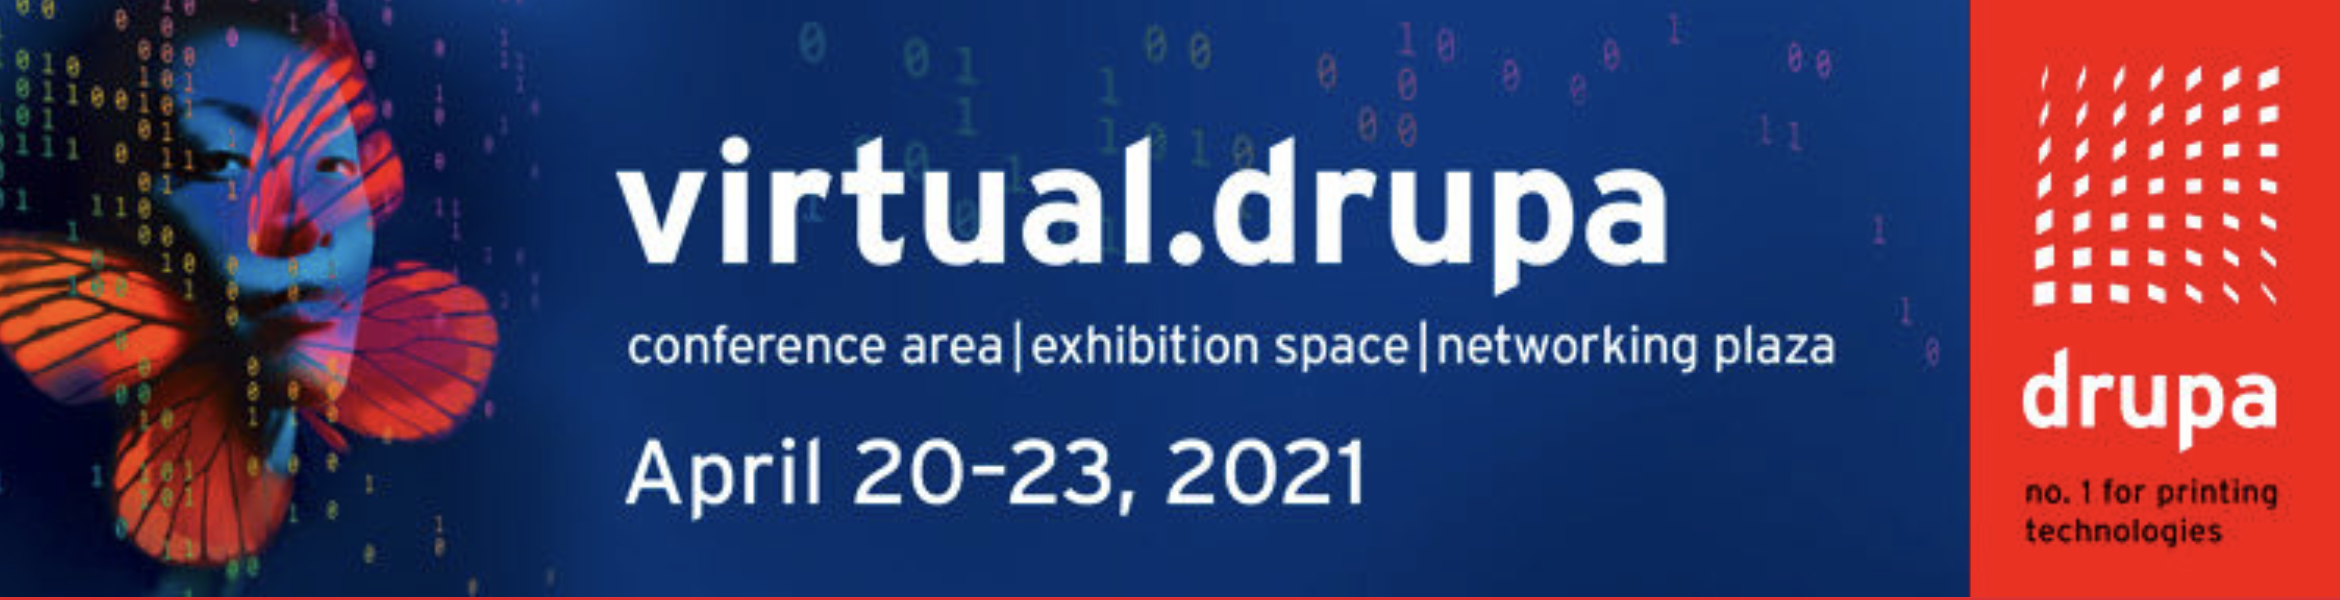 Join X-Rite at virtual.drupa 2021 | X-Rite Tradeshow